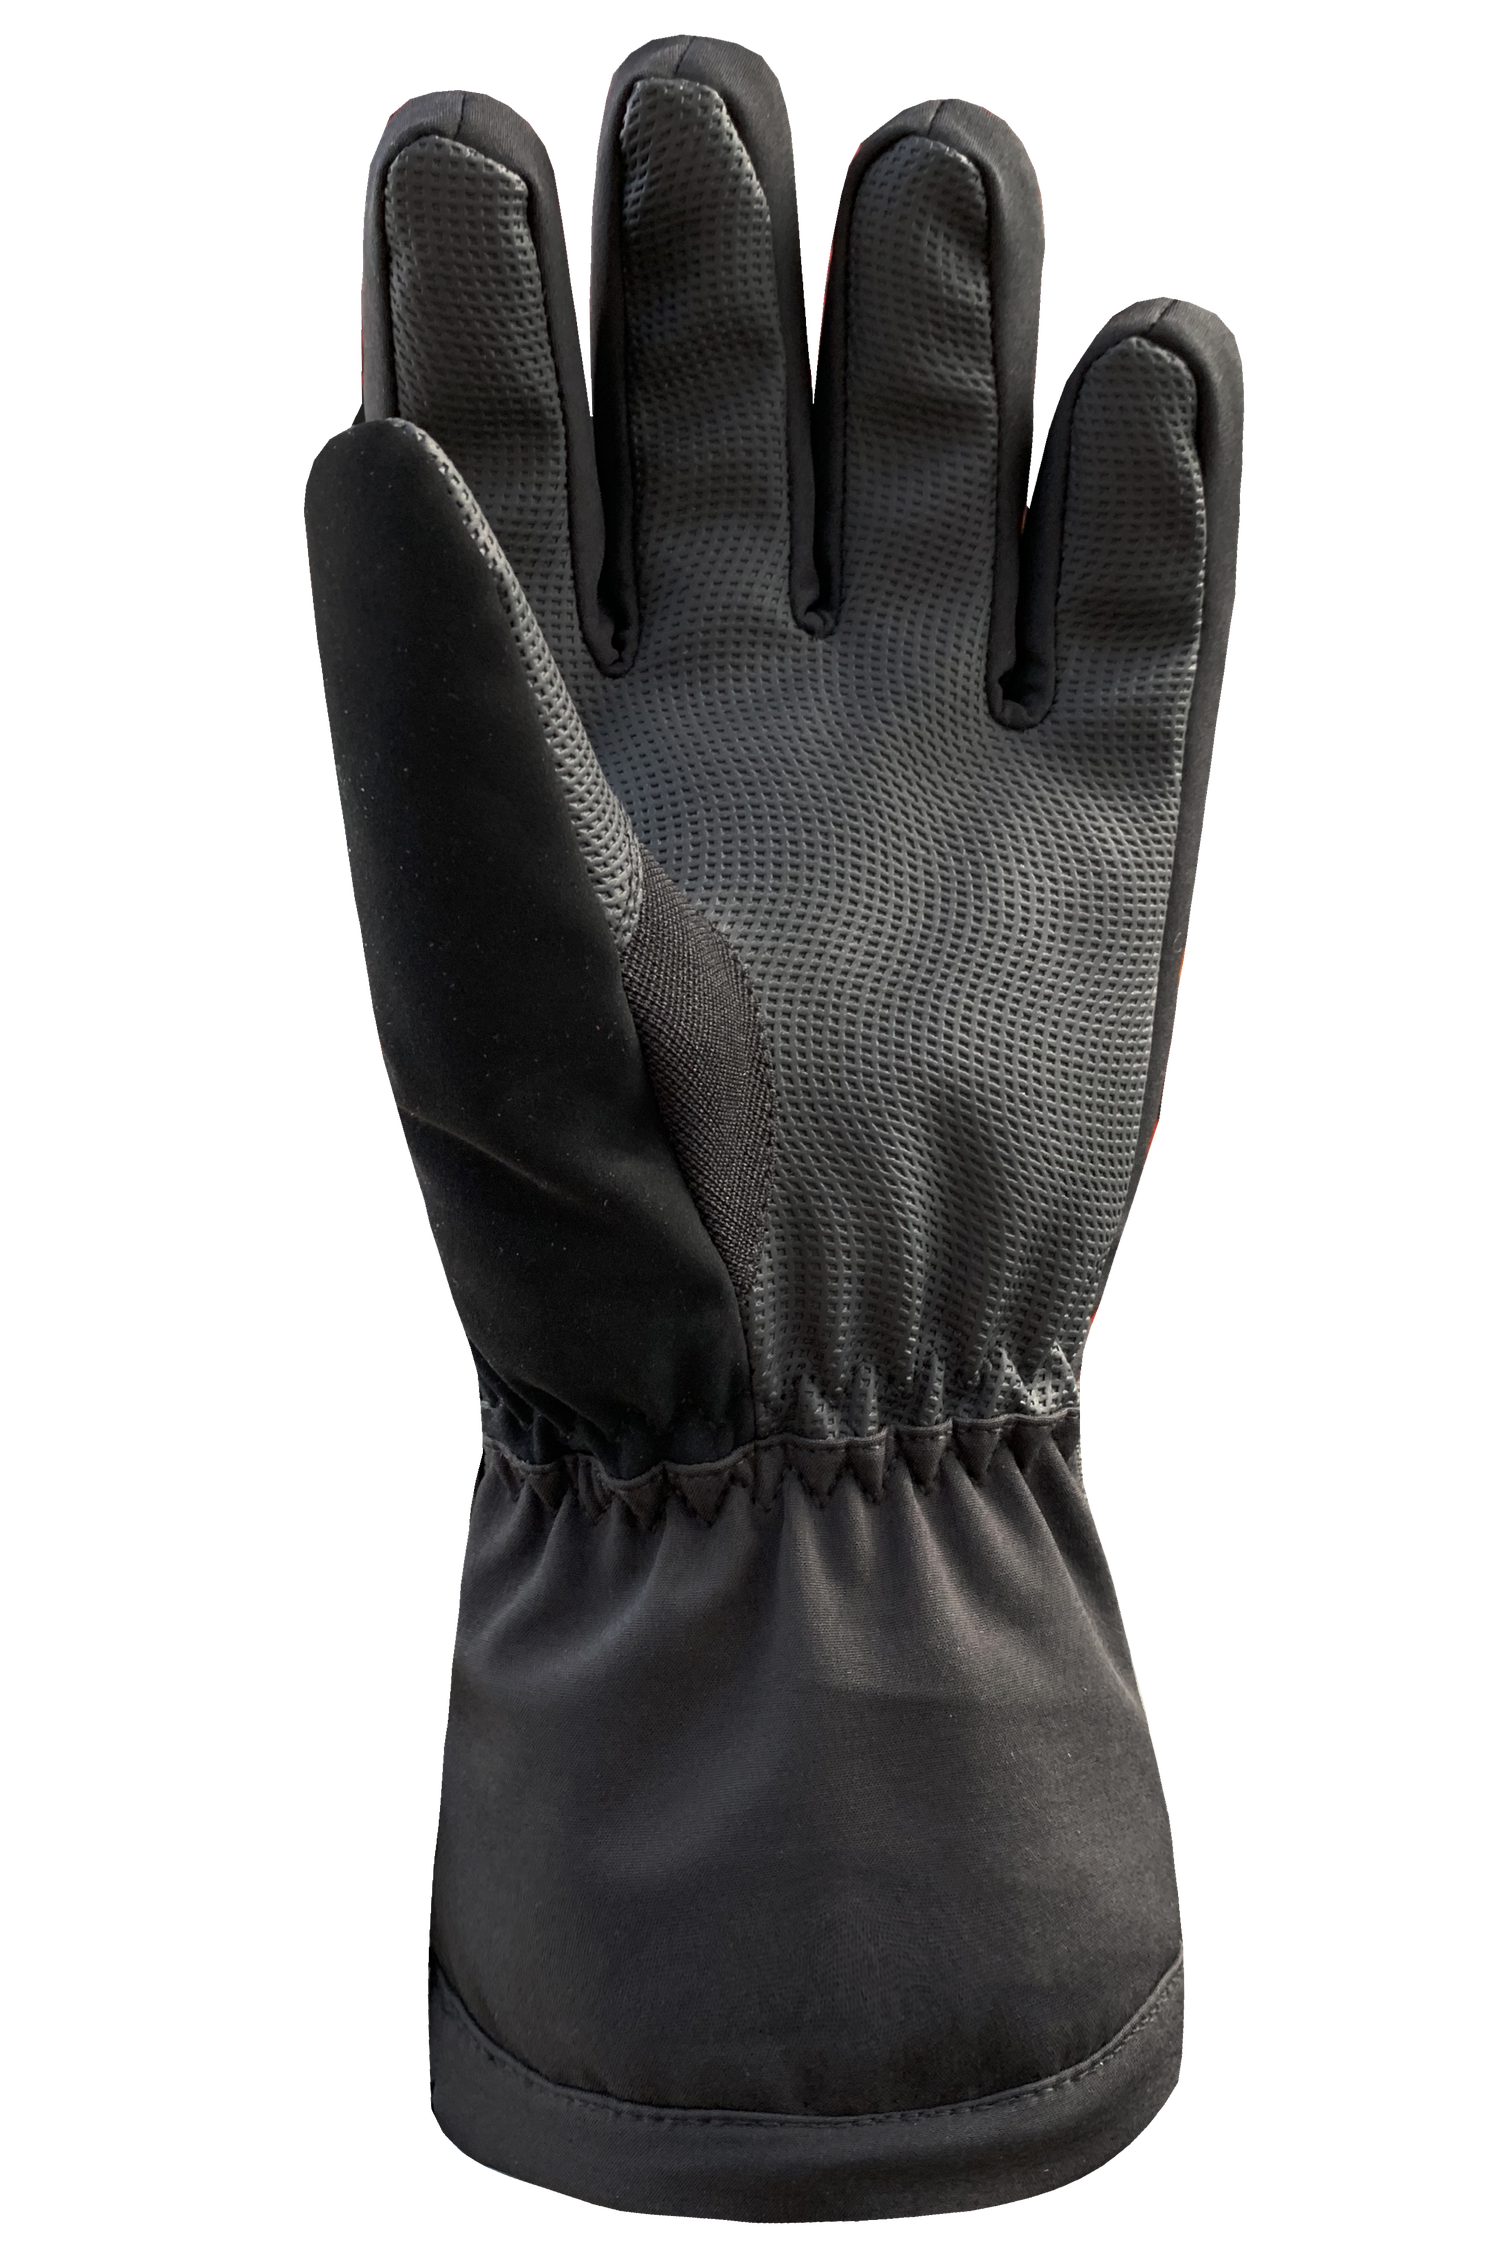 Softee 3 Gloves - Men, Black